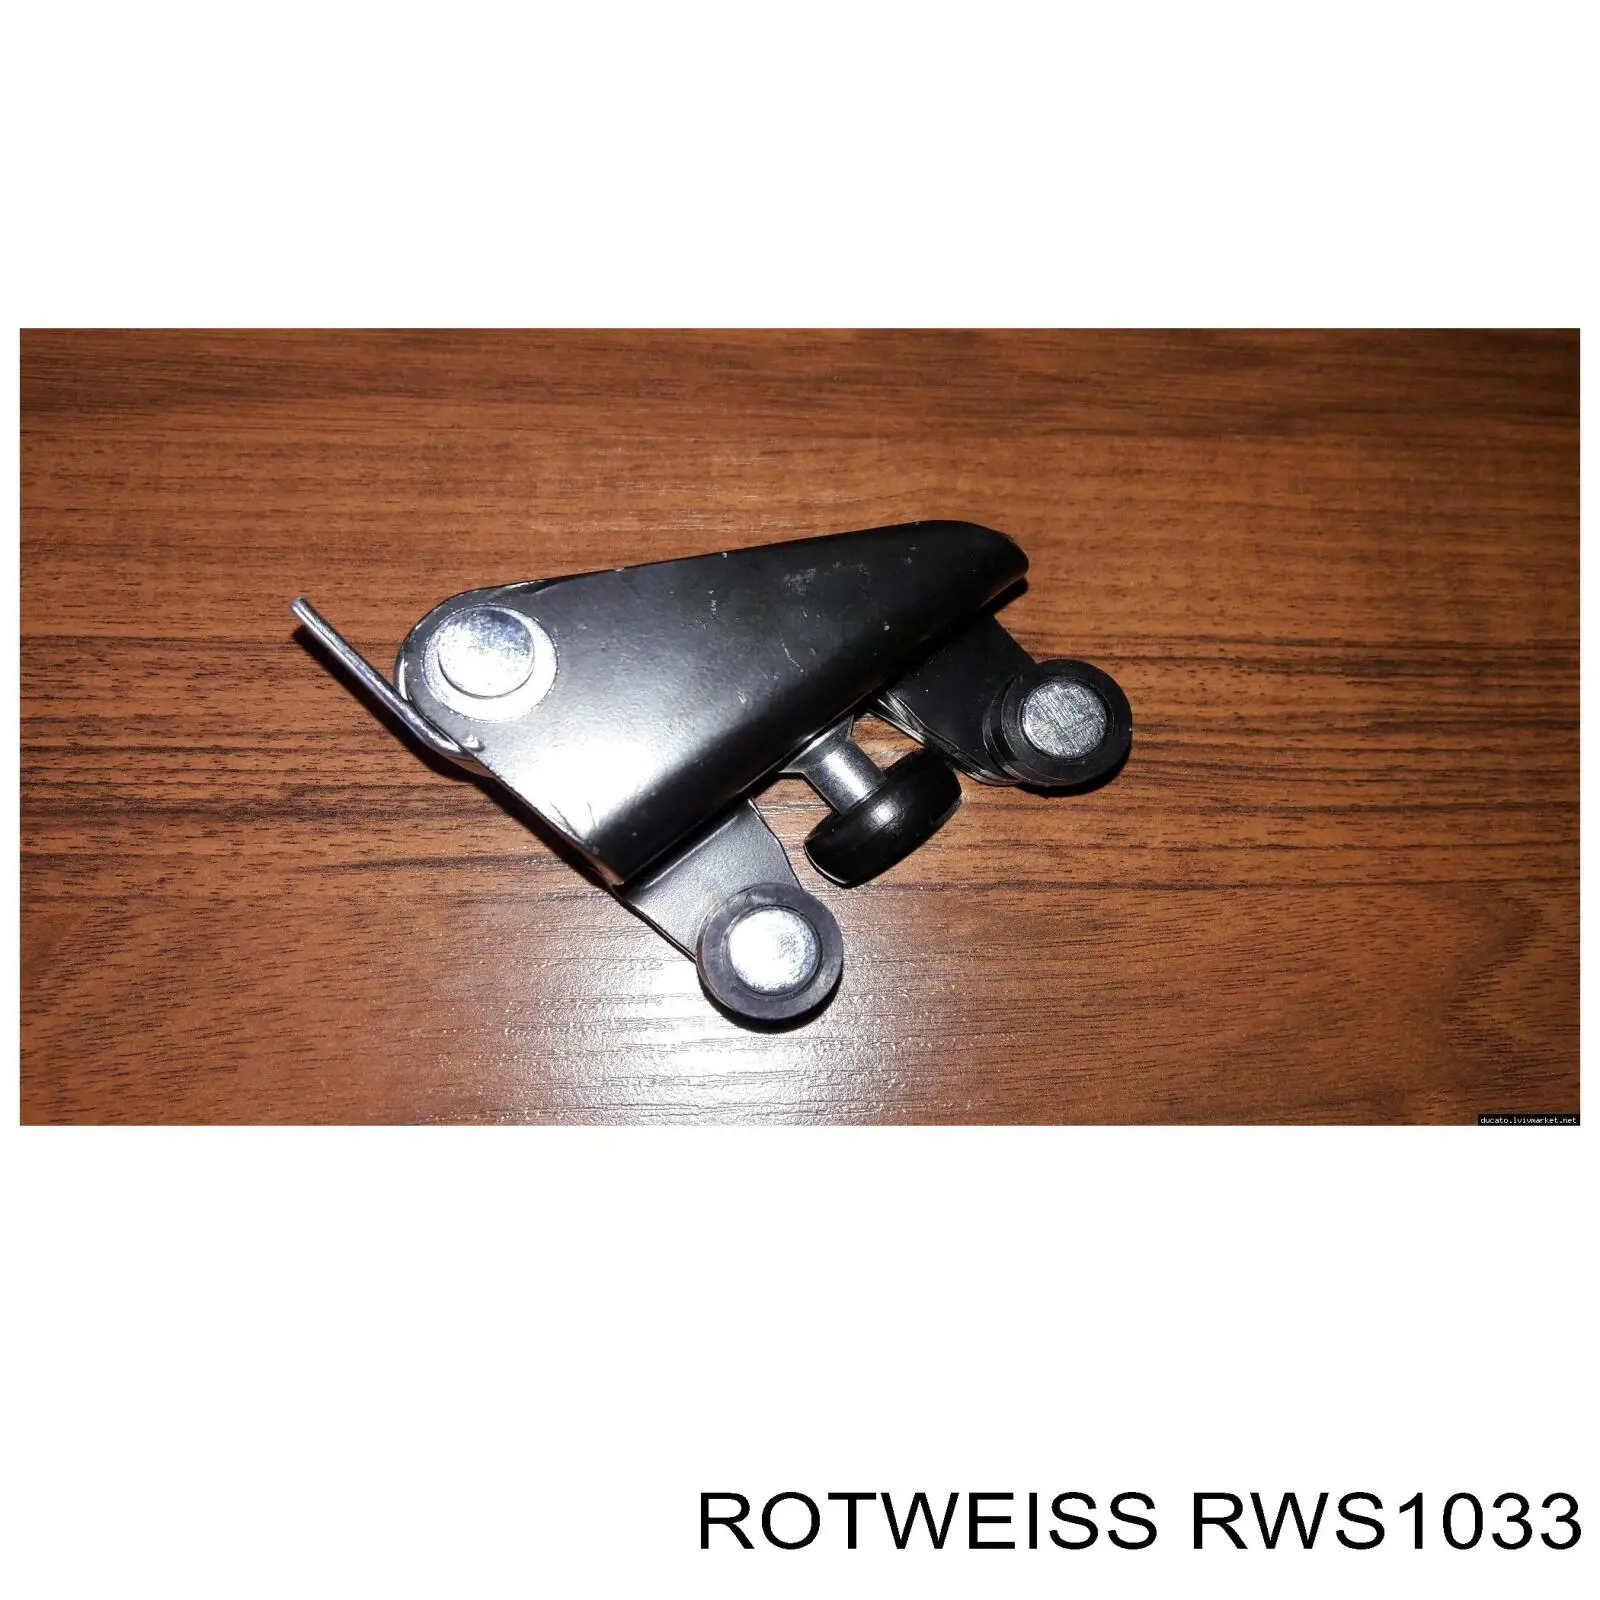 RWS1033 Rotweiss guía rodillo, puerta corrediza, derecho central